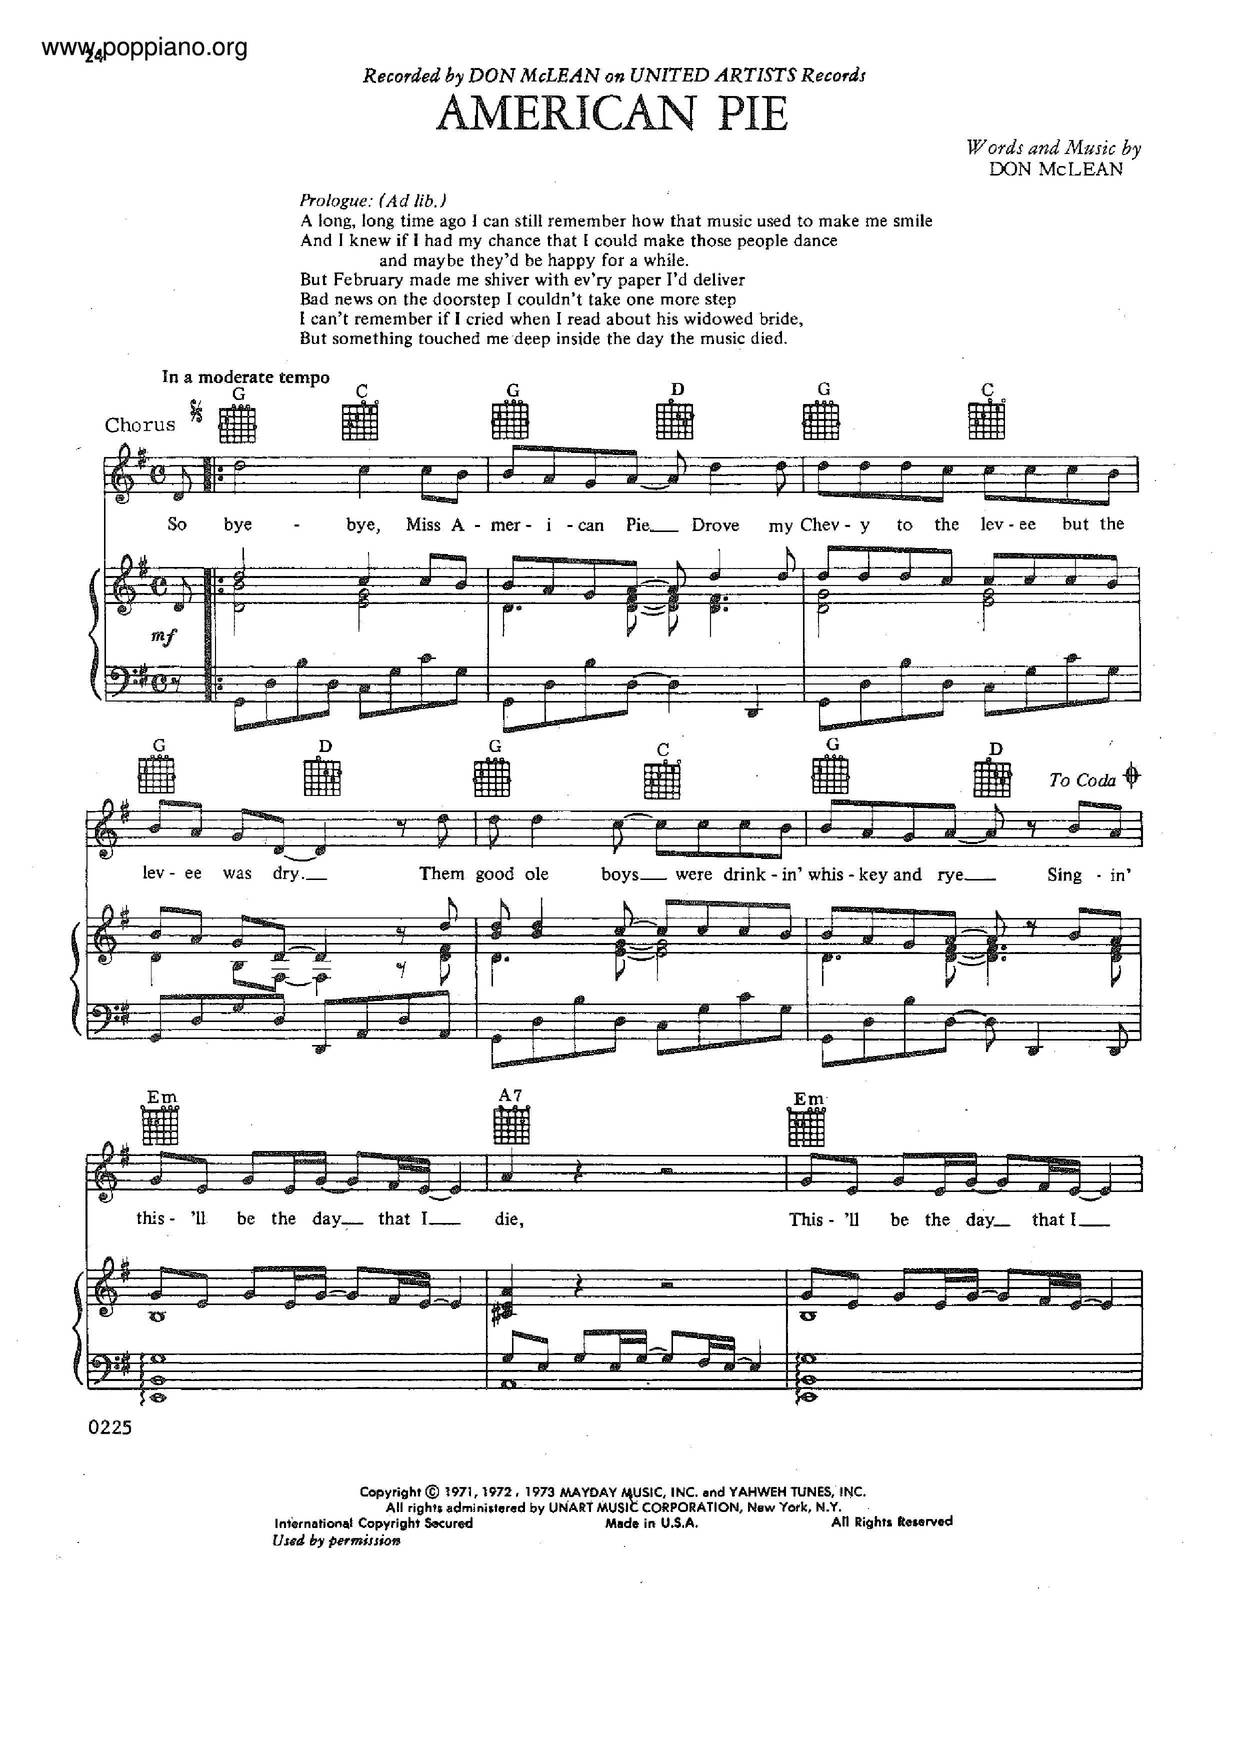 Don Mclean-American Pie Sheet Music pdf, - Free Score Download ★